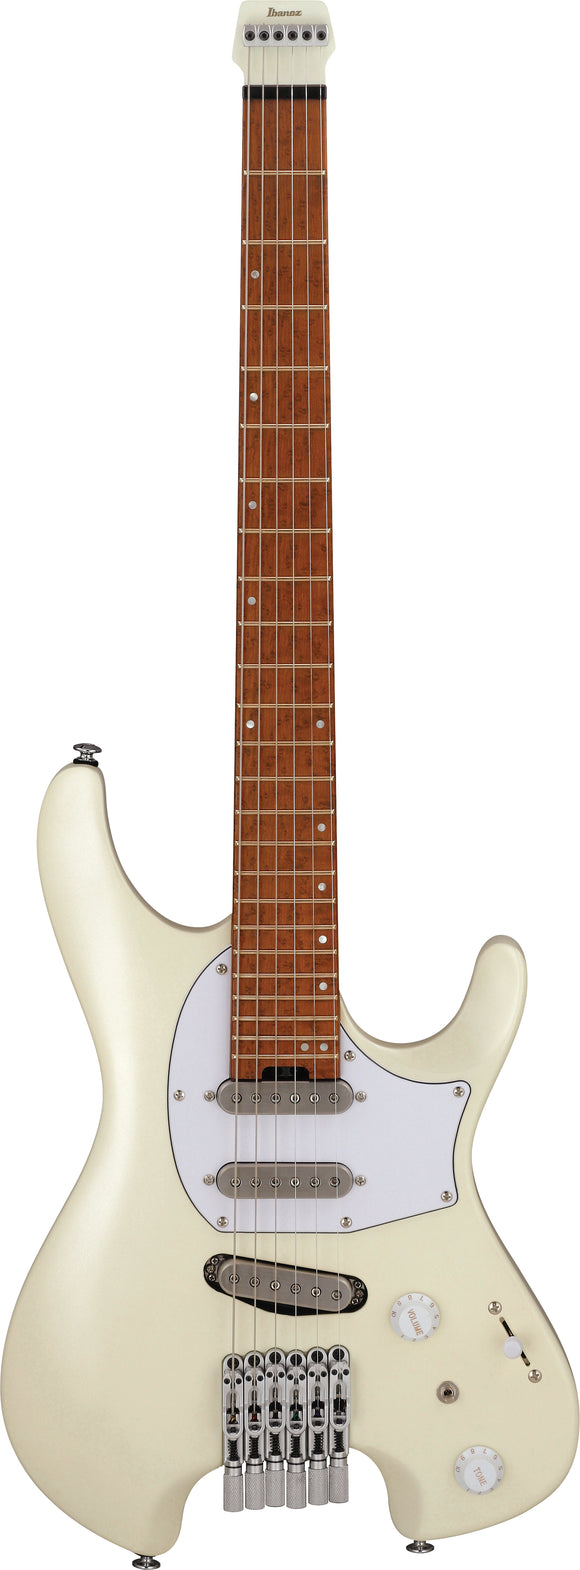 Ibanez Ichika Signature Electric Guitar - Vintage White Matte